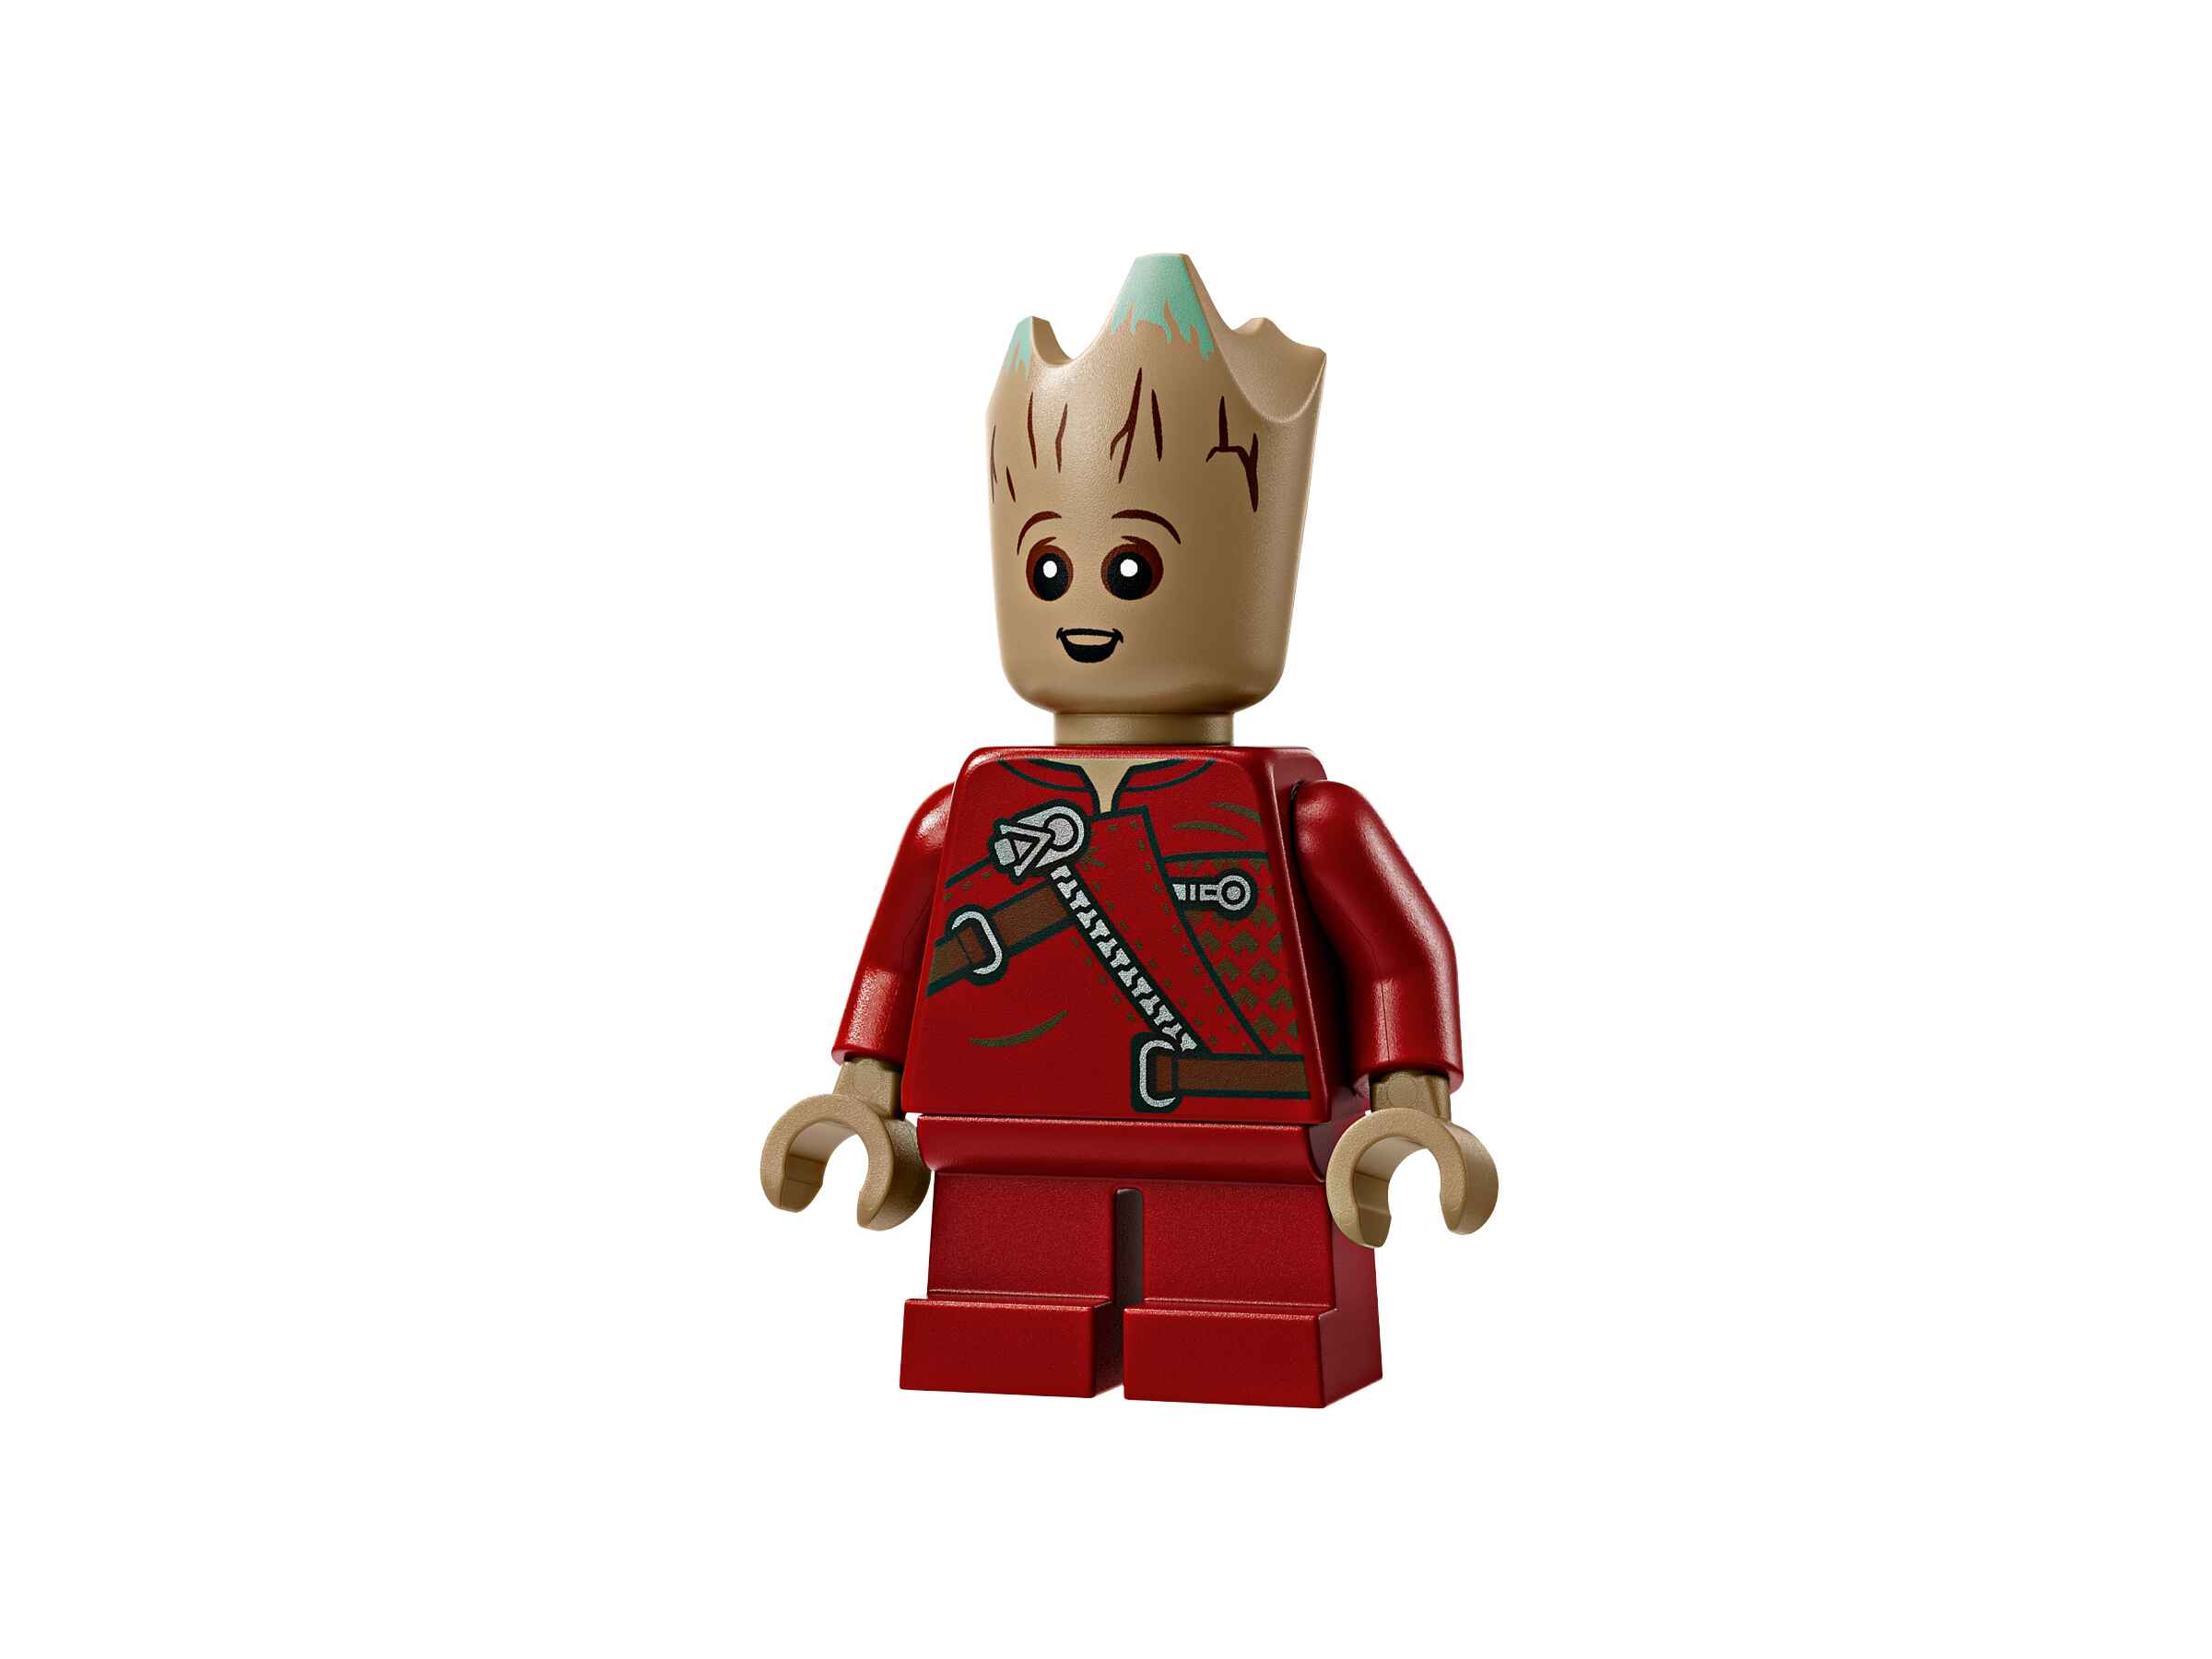 LEGO 76282 Marvel Rocket & Baby Groot, Bewegliche Actionfigur